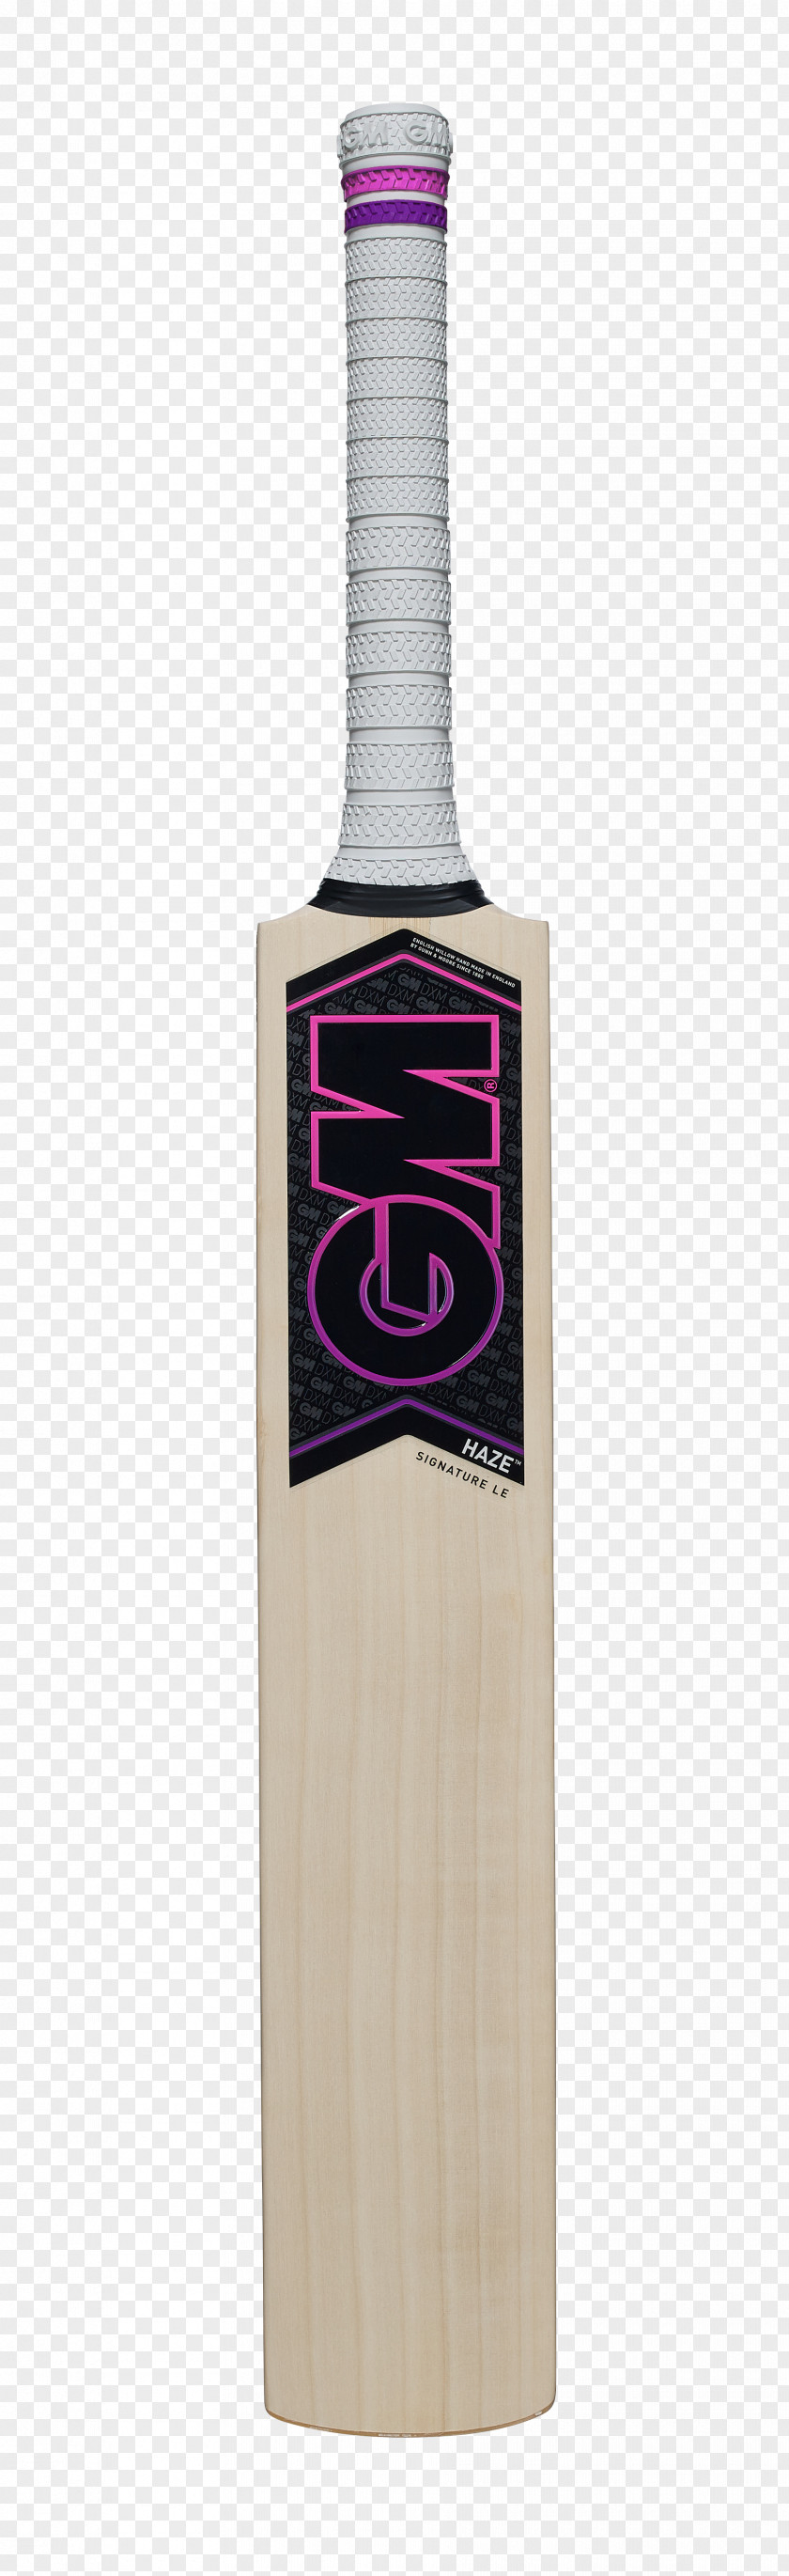 Cricket Bats Batting Gunn & Moore England PNG